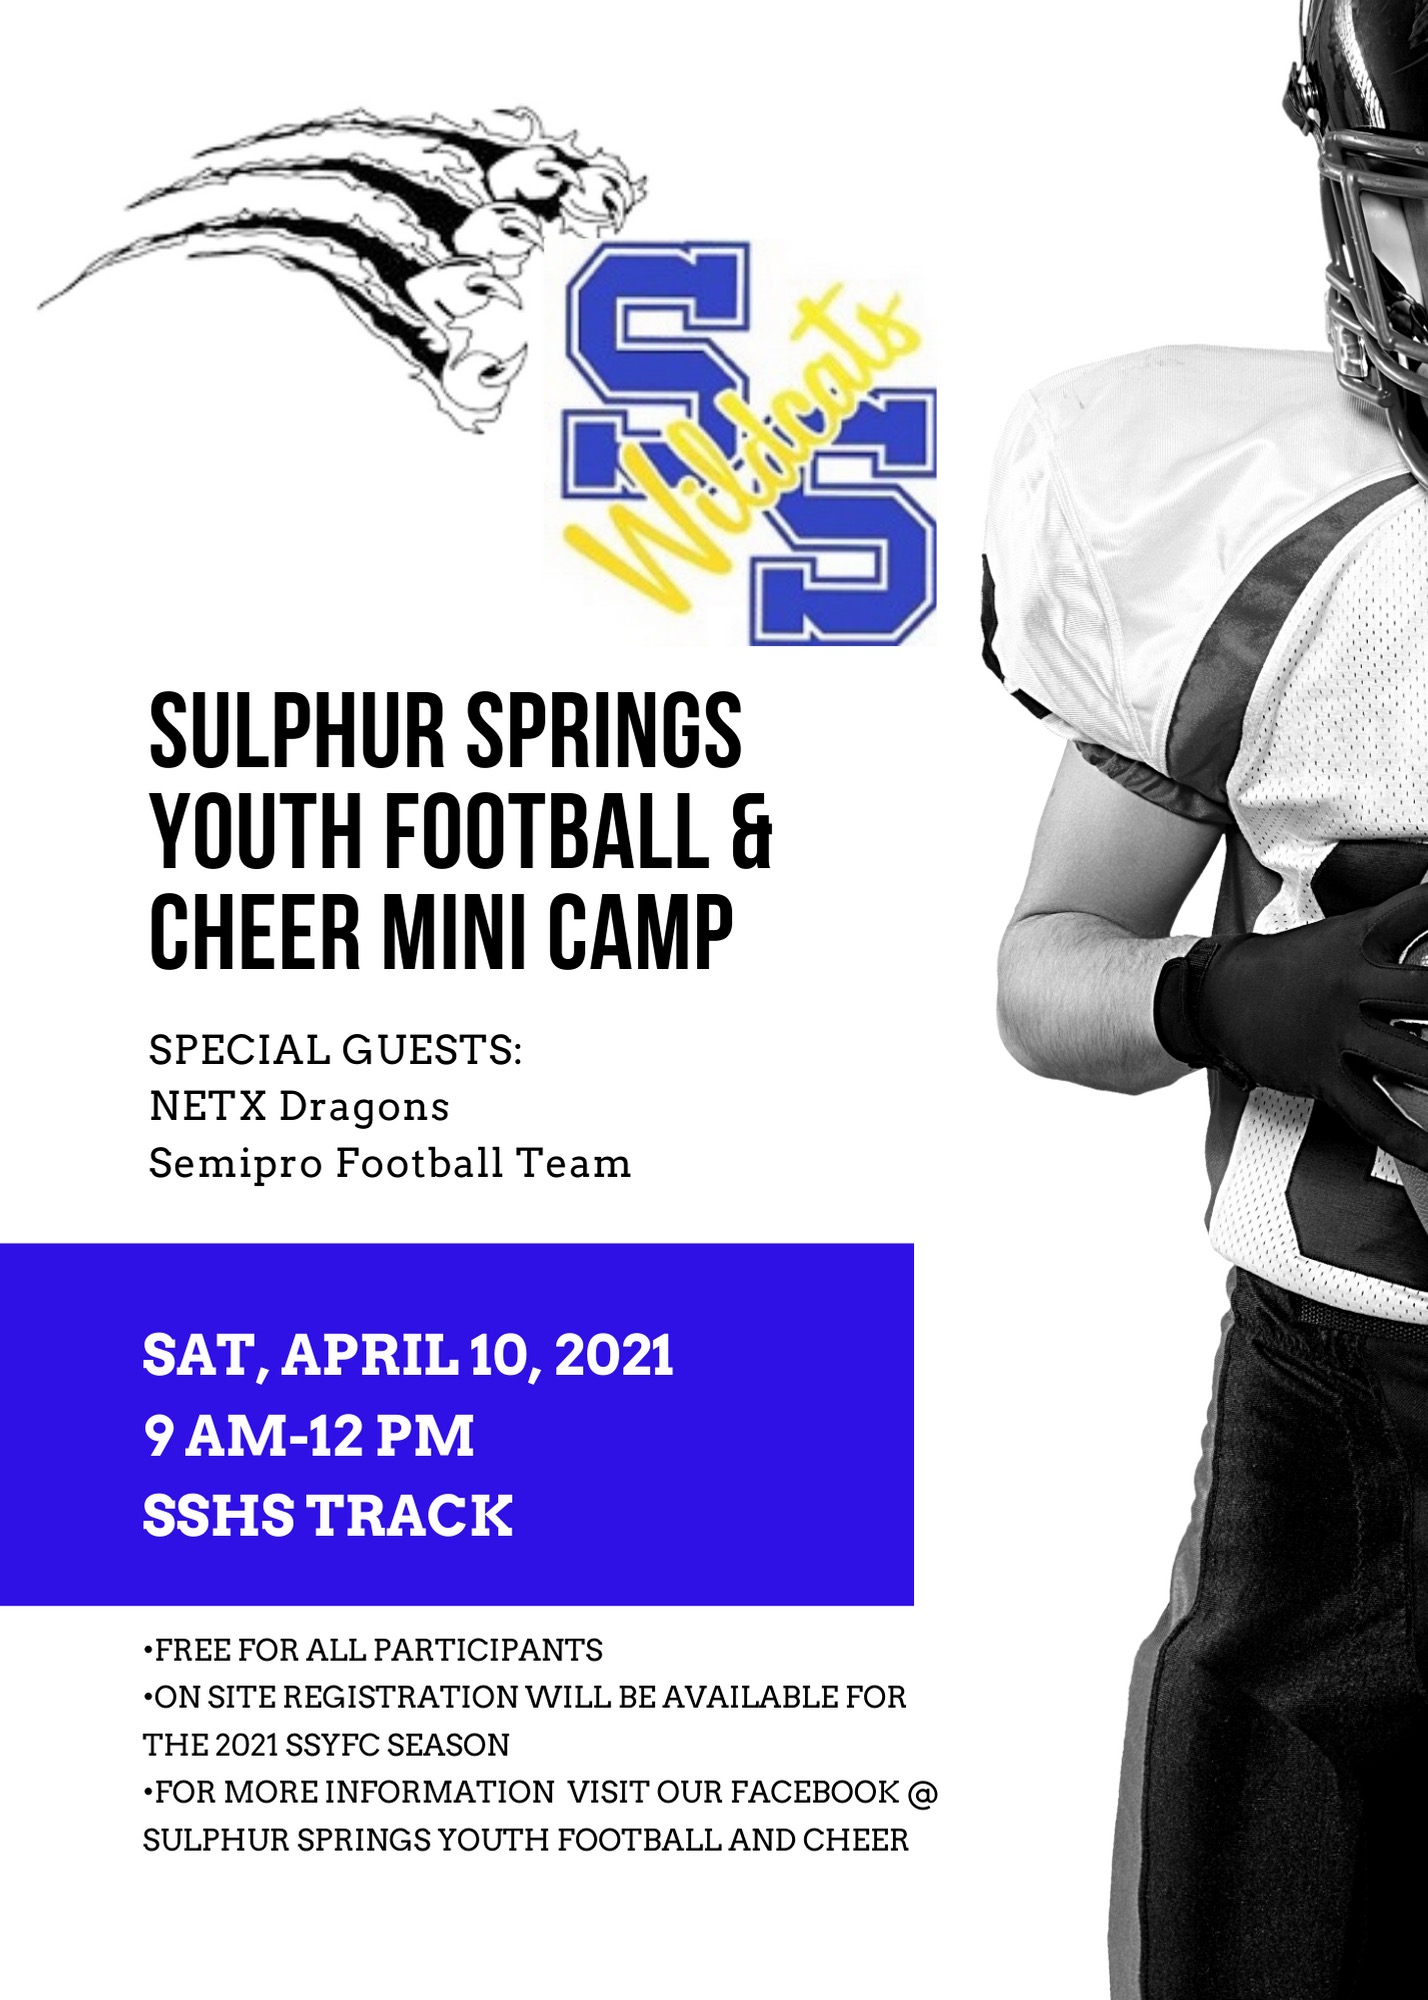 Sulphur Springs Youth Football & Cheer Holding Mini-Camp on Saturday